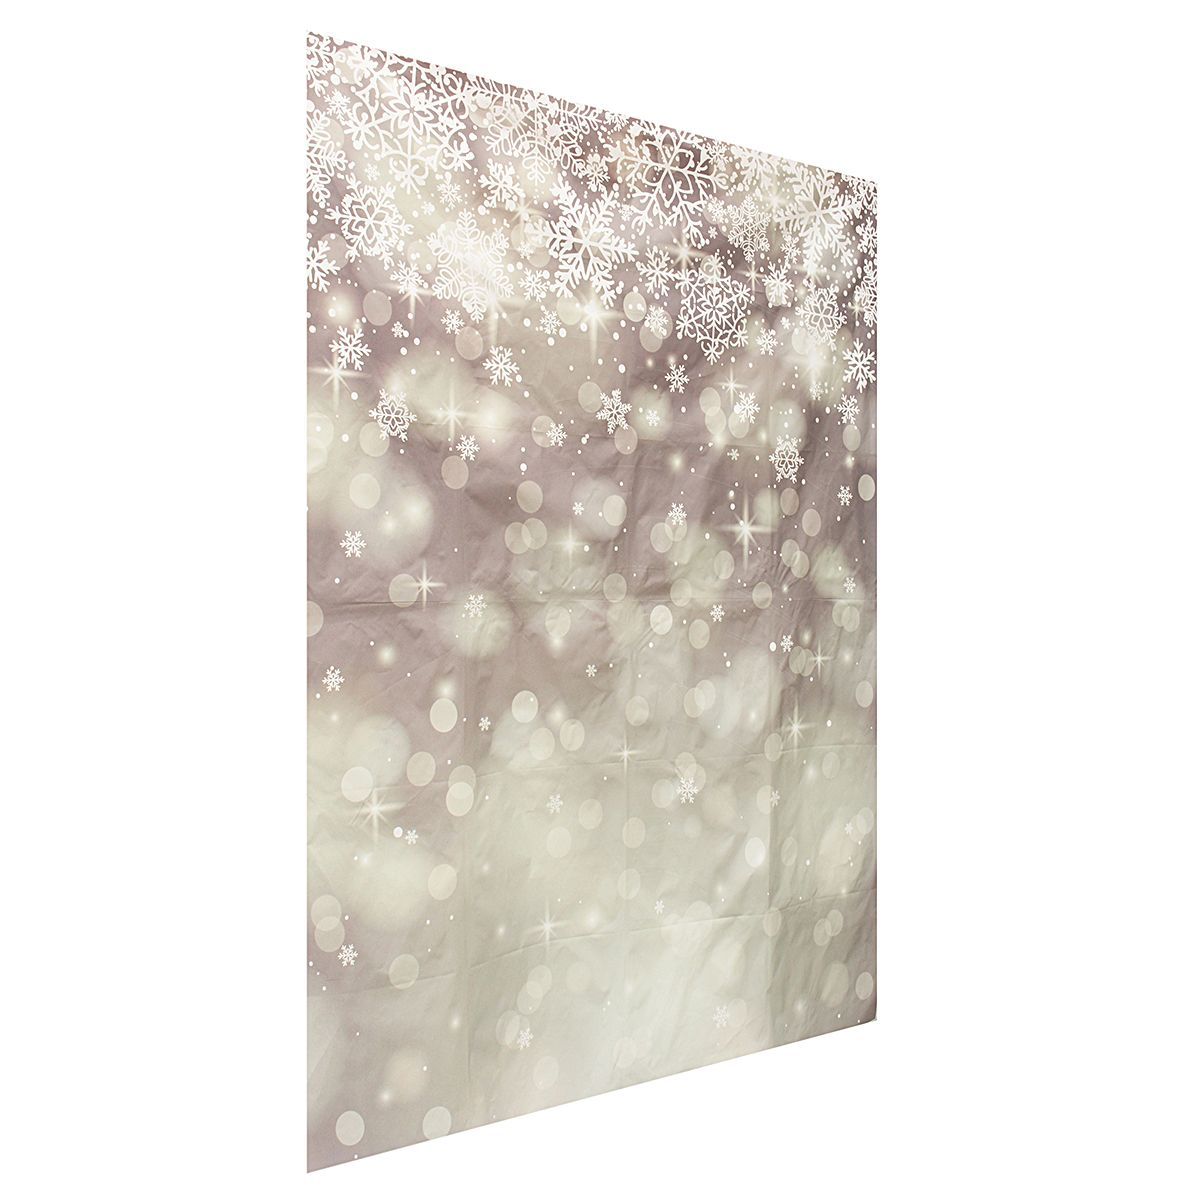 5x7ft-Vinyl-Christmas-Snow-Photography-Backdrop-Background-Studio-Photo-Props-1380954